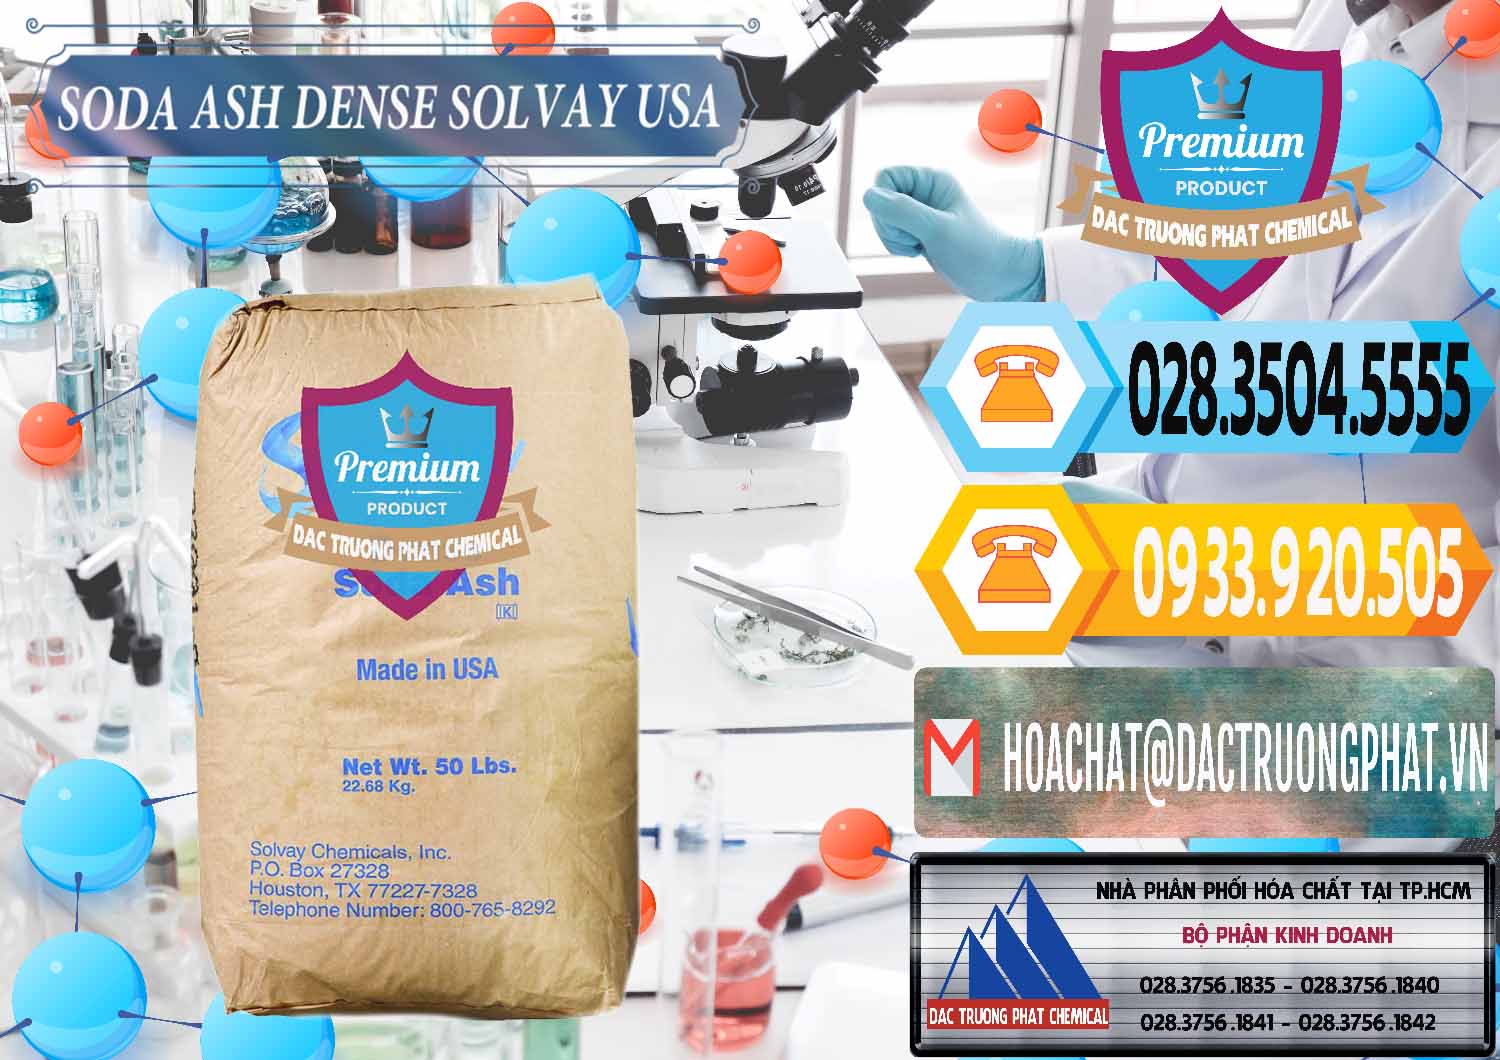 Chuyên cung cấp _ bán Soda Ash Dense - NA2CO3 Solvay Mỹ USA - 0337 - Nơi chuyên cung cấp và bán hóa chất tại TP.HCM - hoachattayrua.net